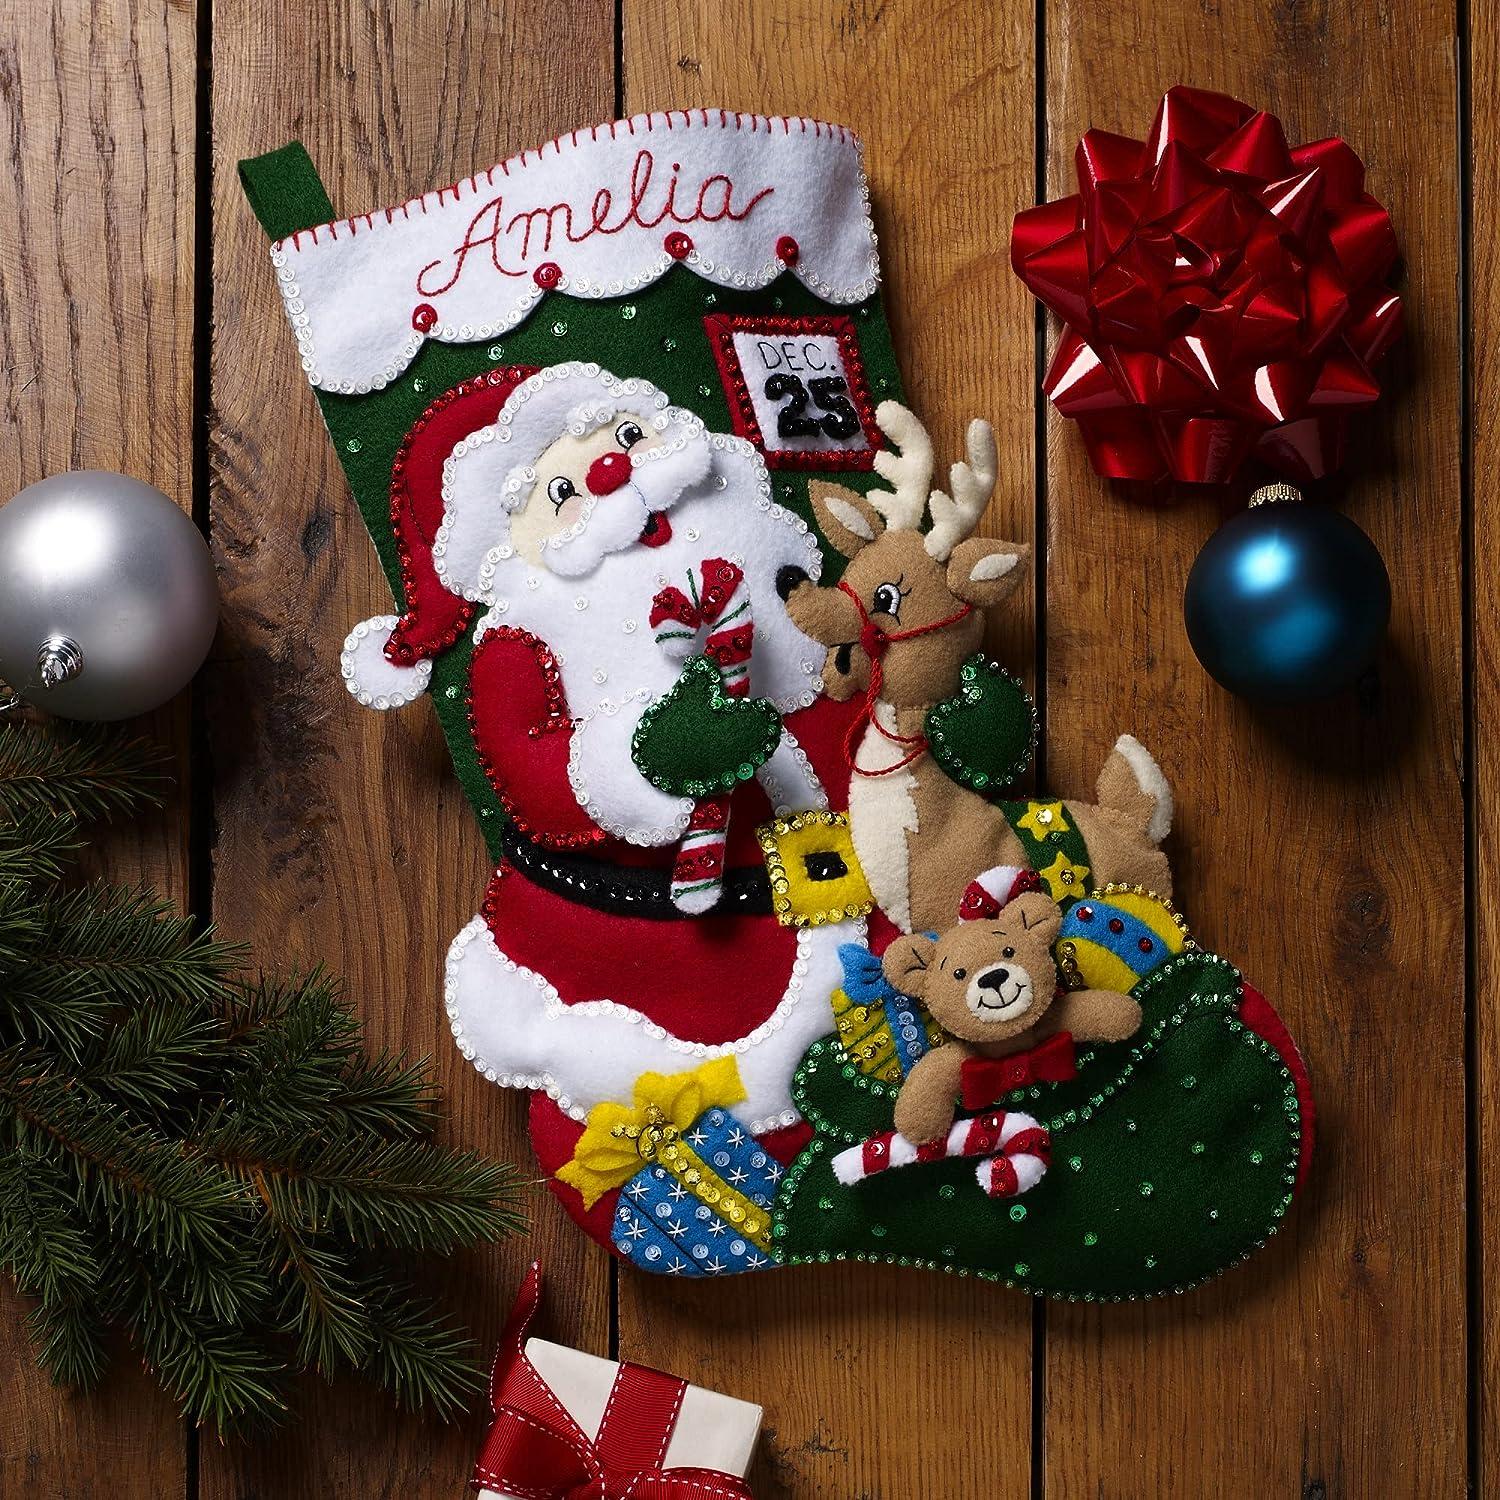 Bucilla, Santa's Barn Friends, Felt Applique Christmas Stocking, 18